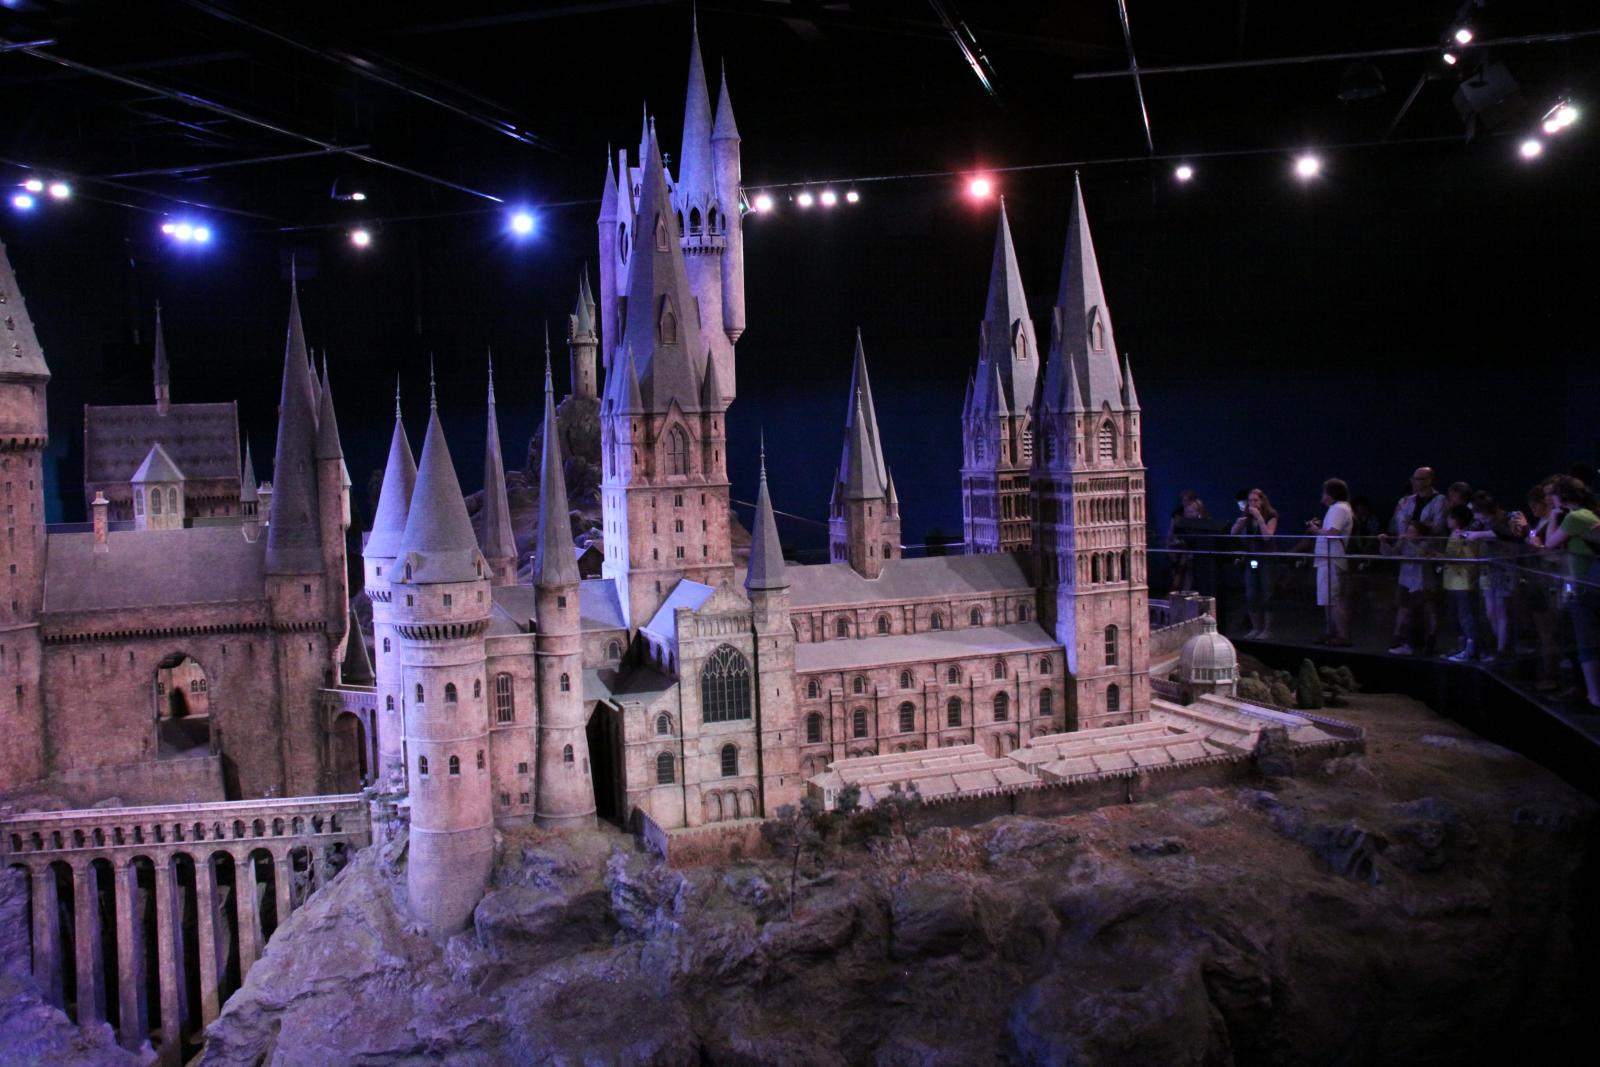 making harry potter8 The Making of Harry Potter, Warner Bros Studio London